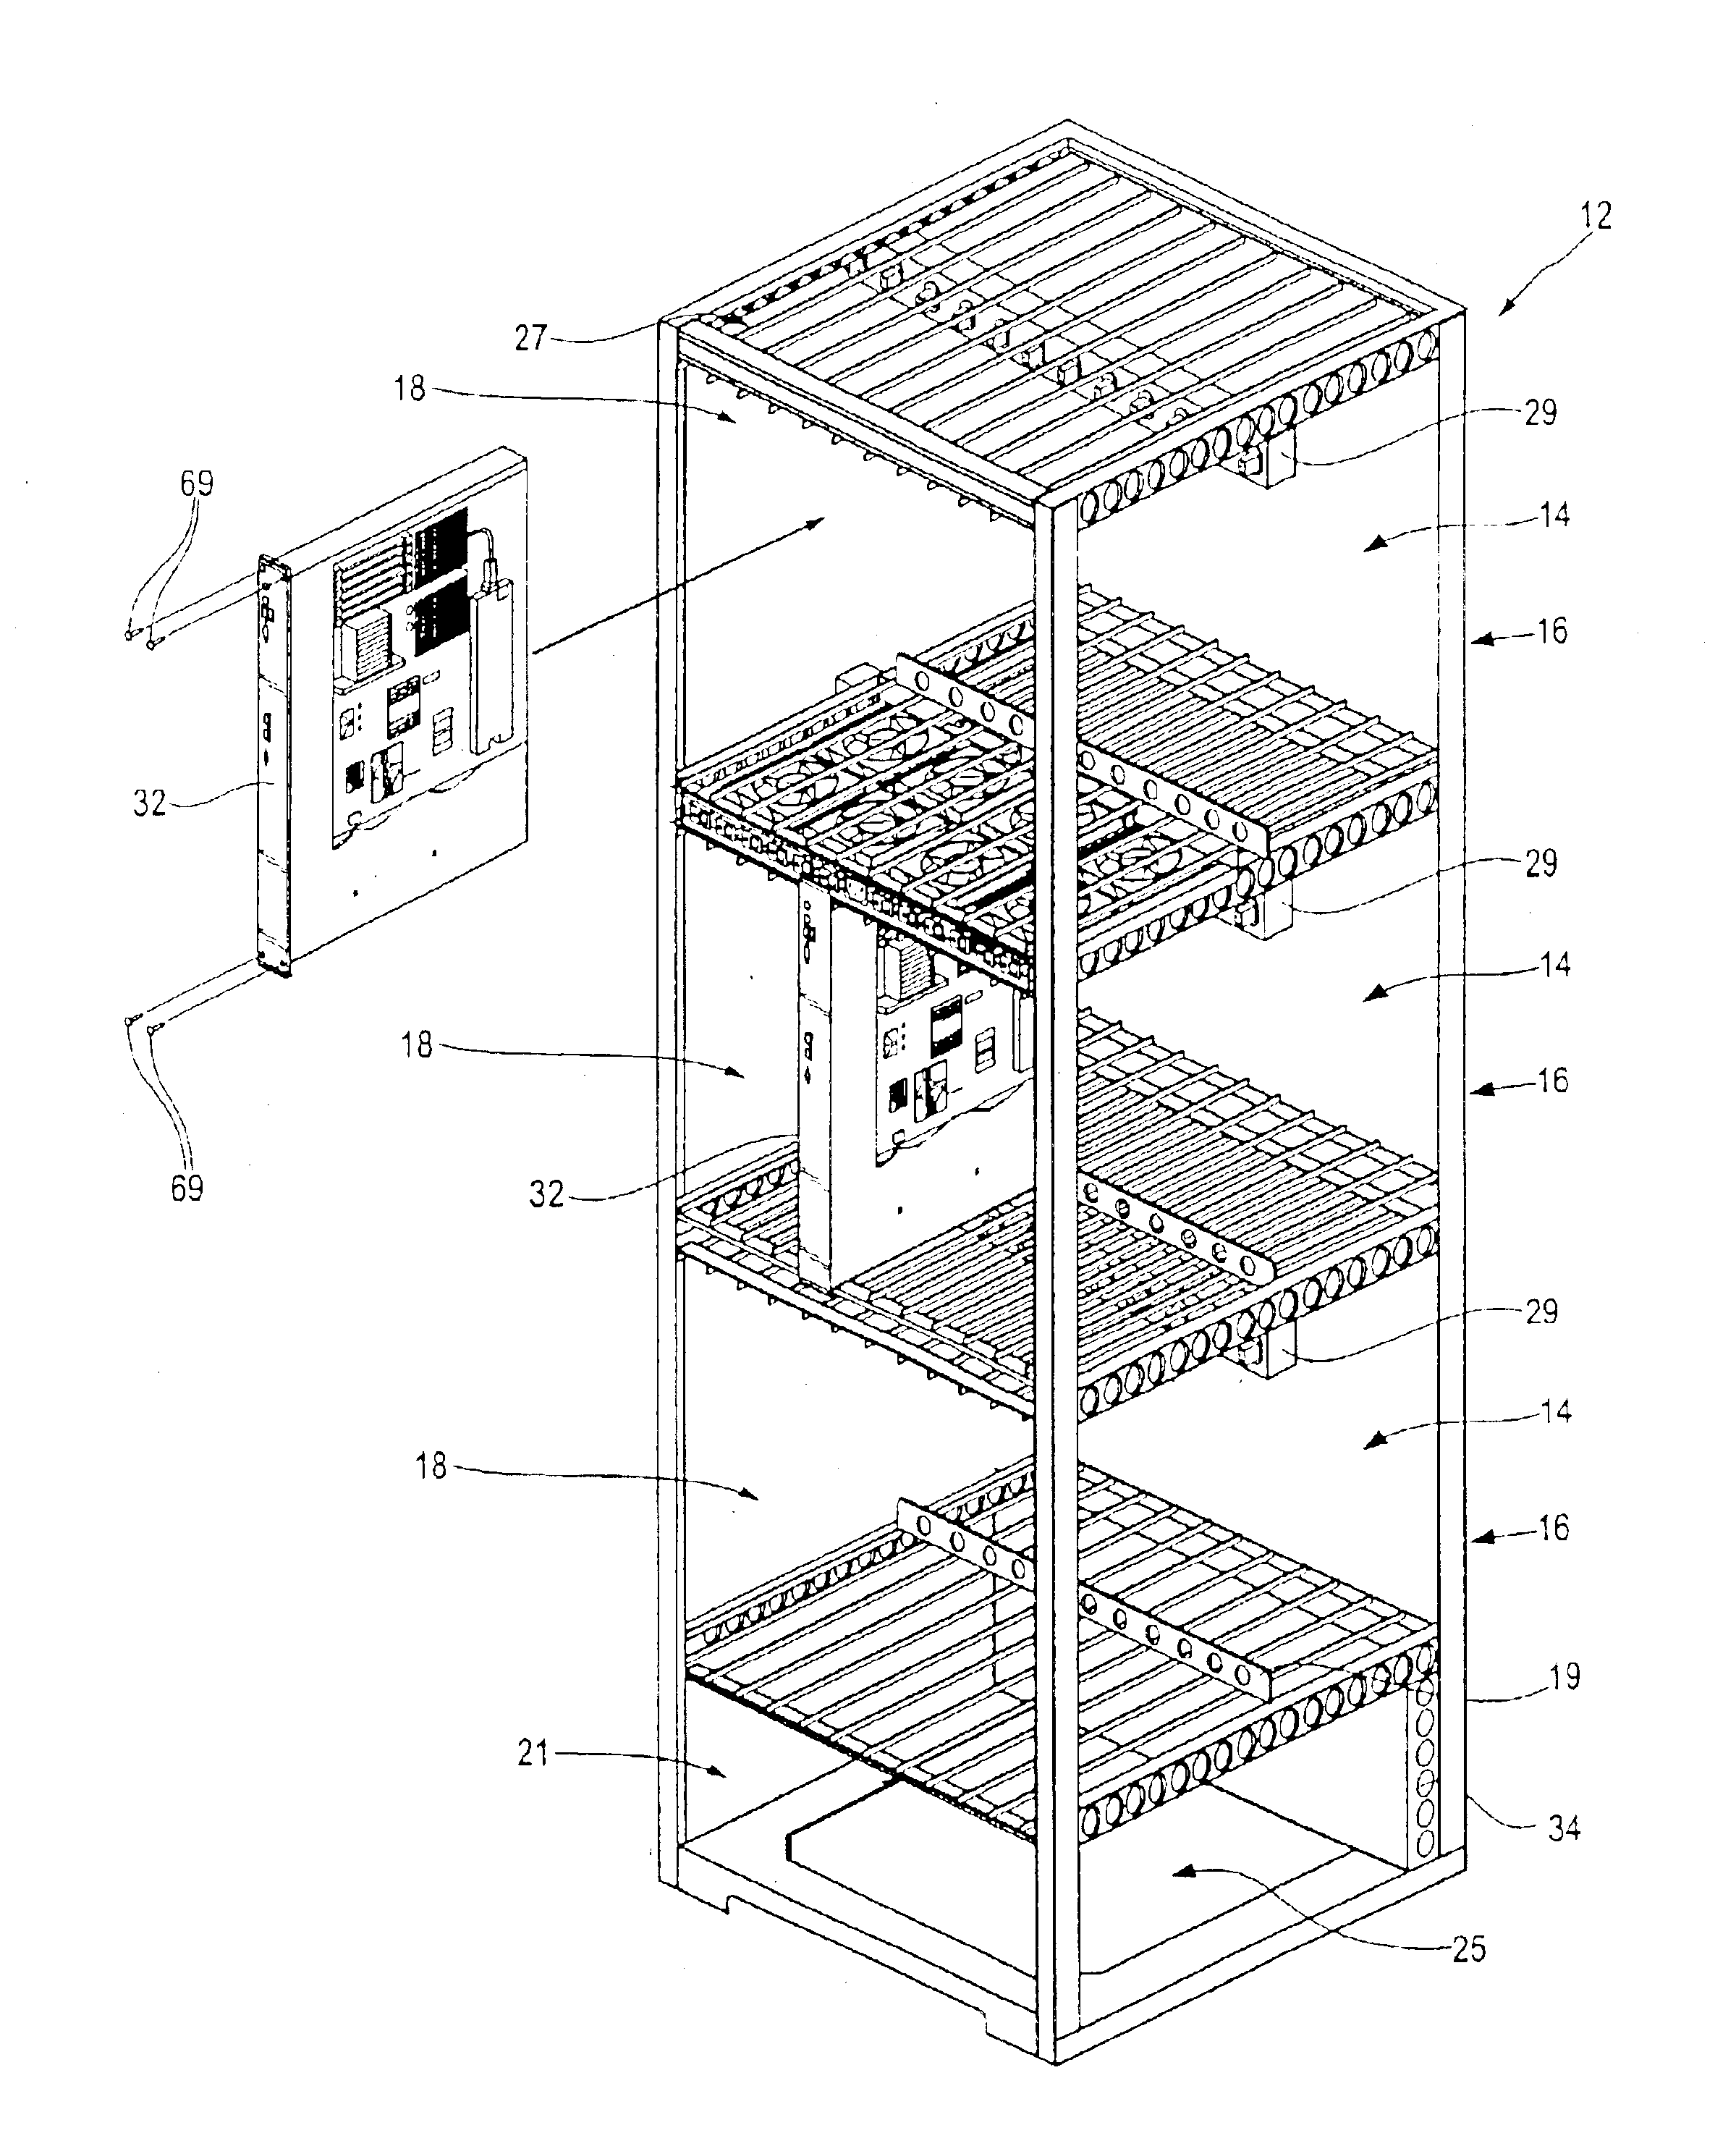 Rack mountable computer component power distribution unit and method